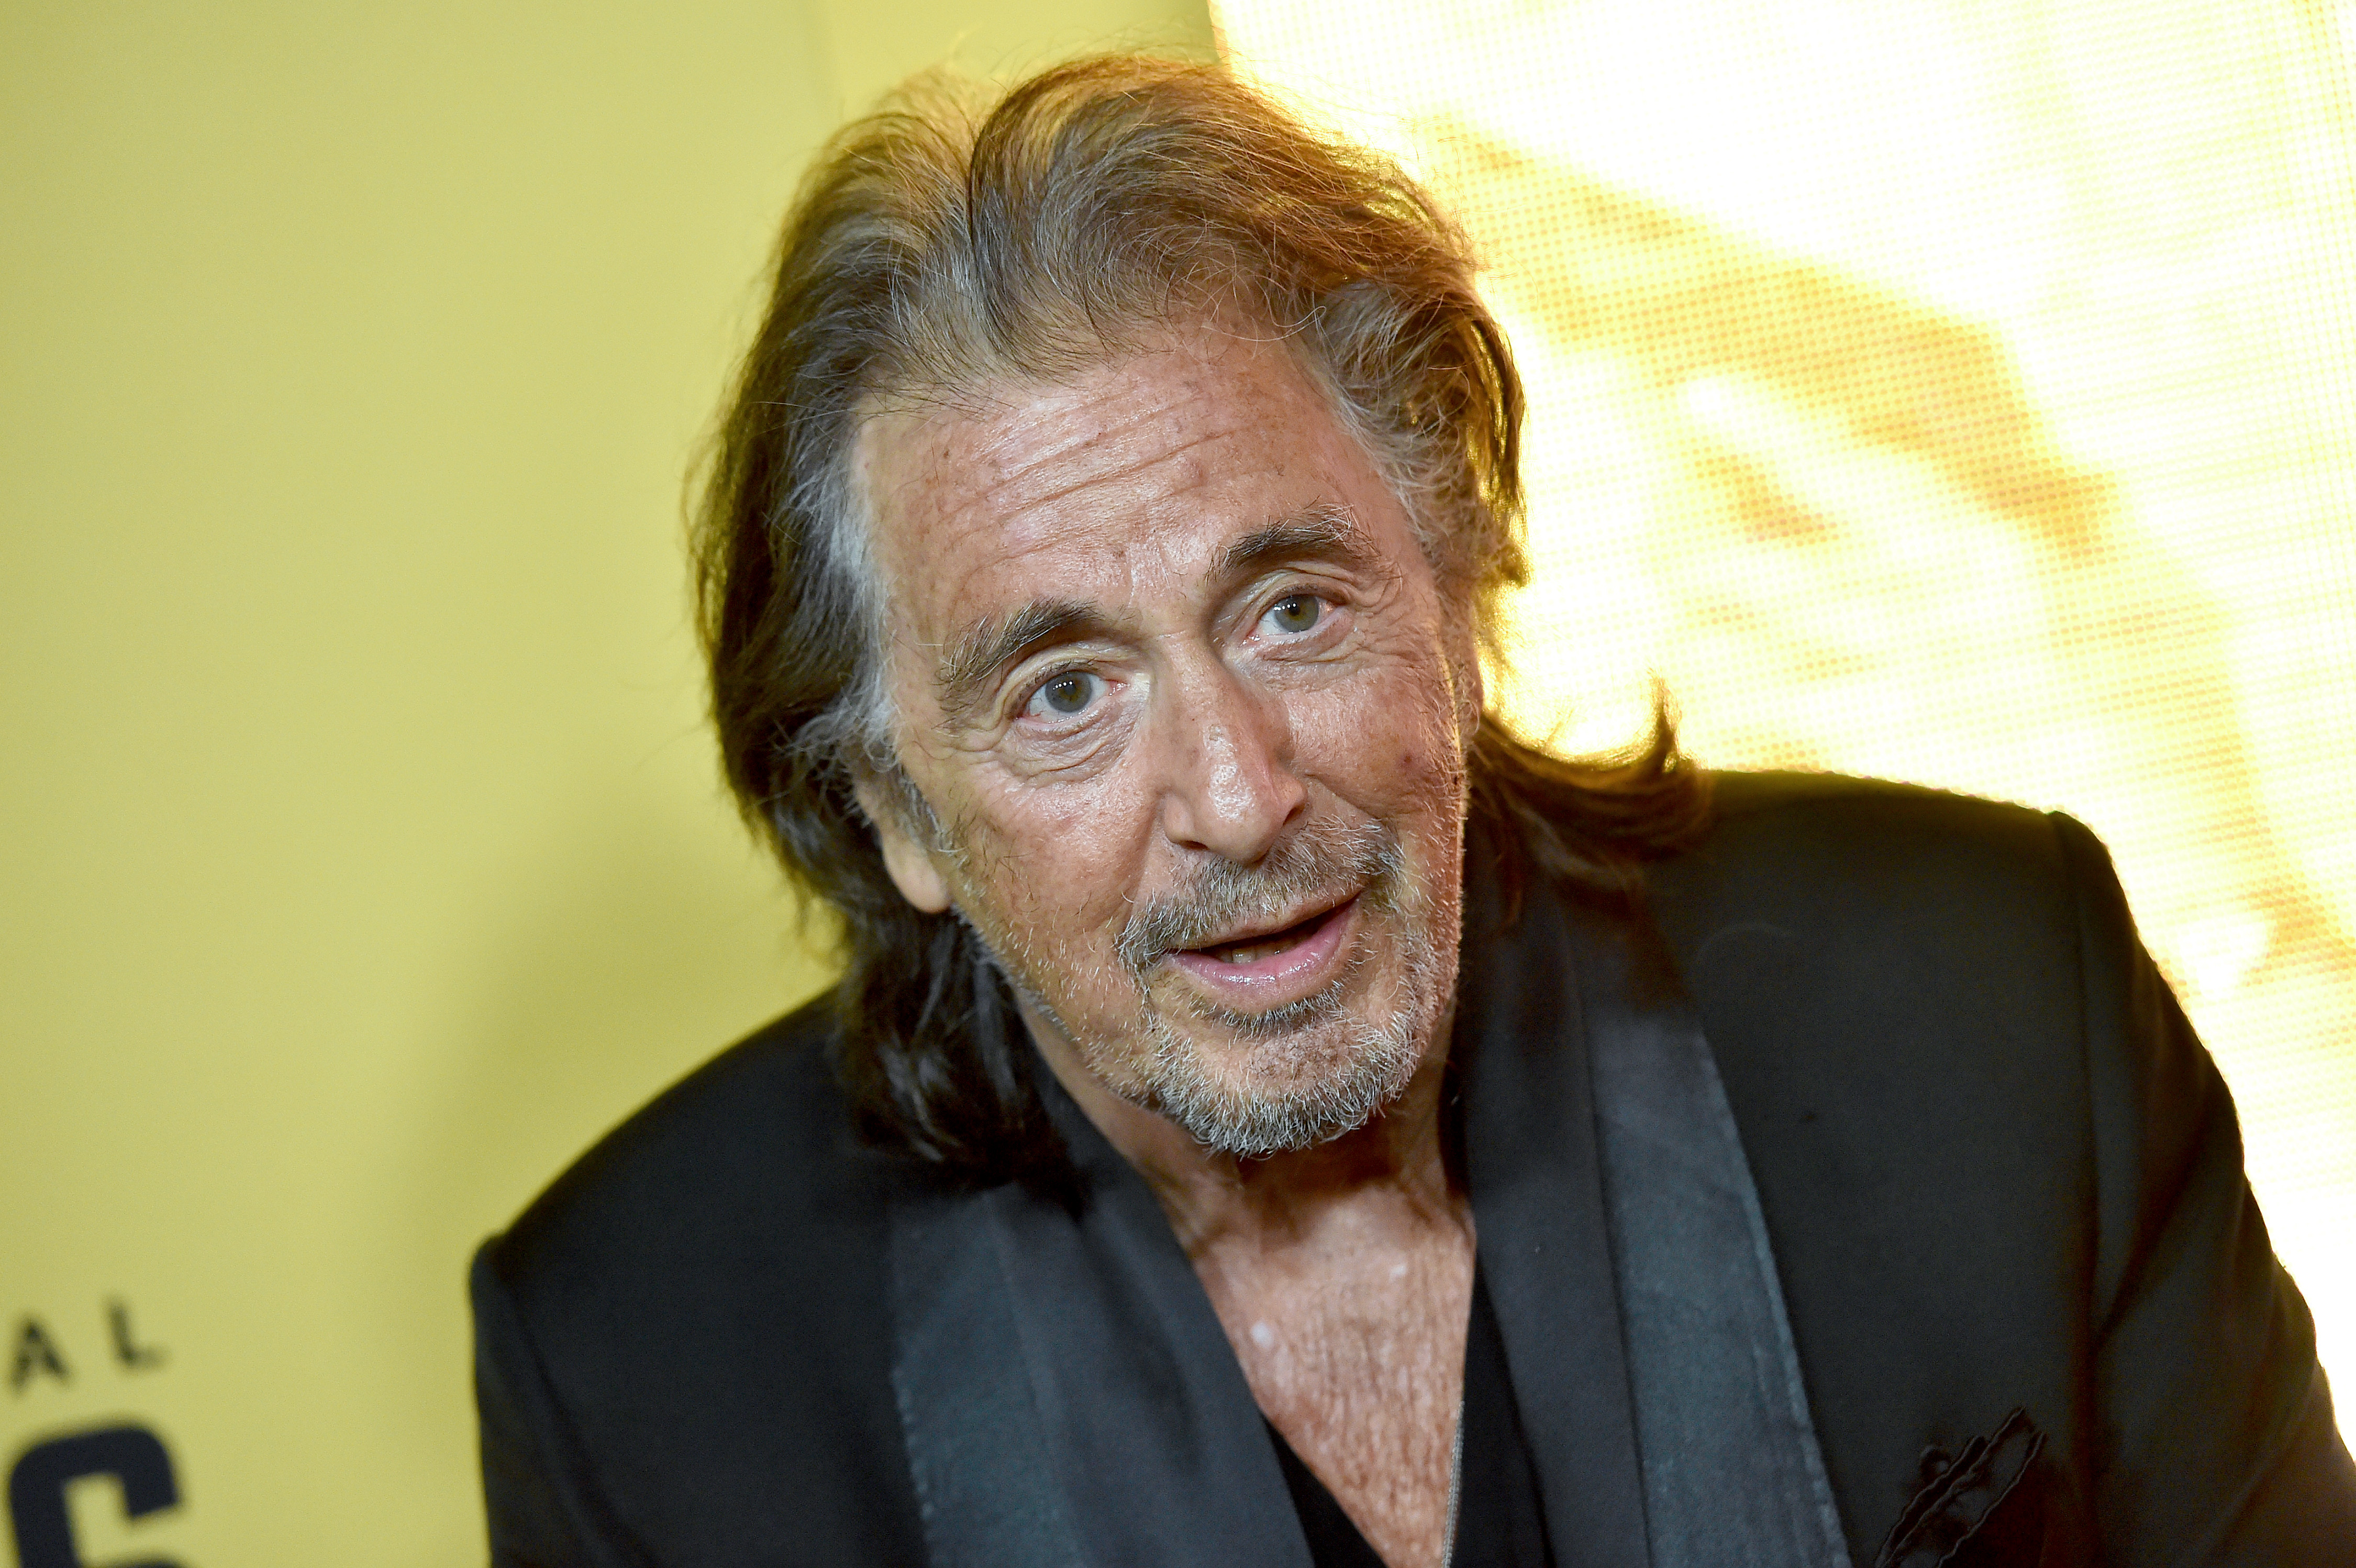 Al Pacino in Los Angeles, Kalifornien am 19. Februar 2020 | Quelle: Getty Images